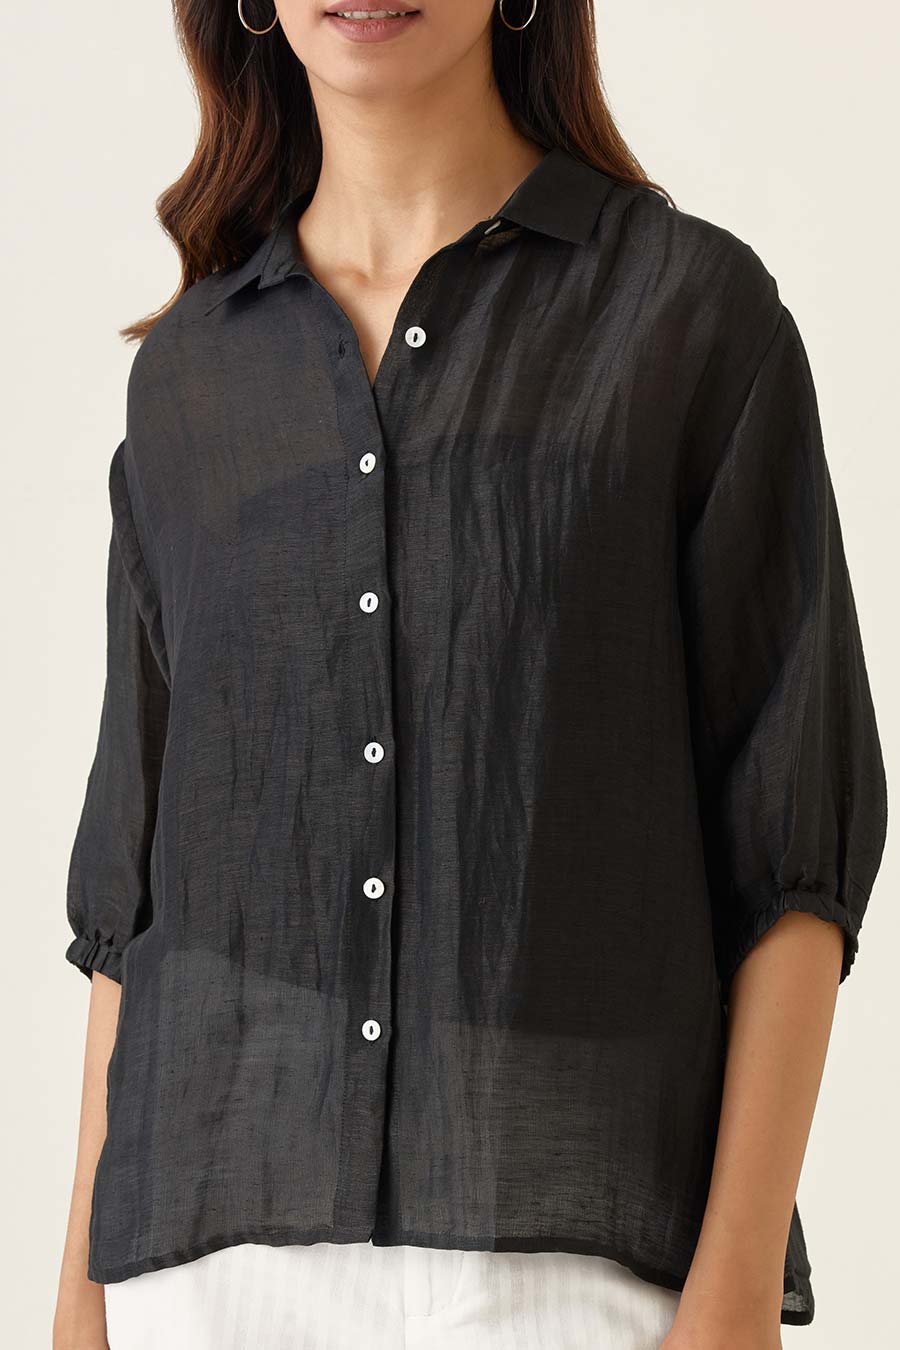 Black Linen Silk Shirt with High Slit Pant Co-ord Set